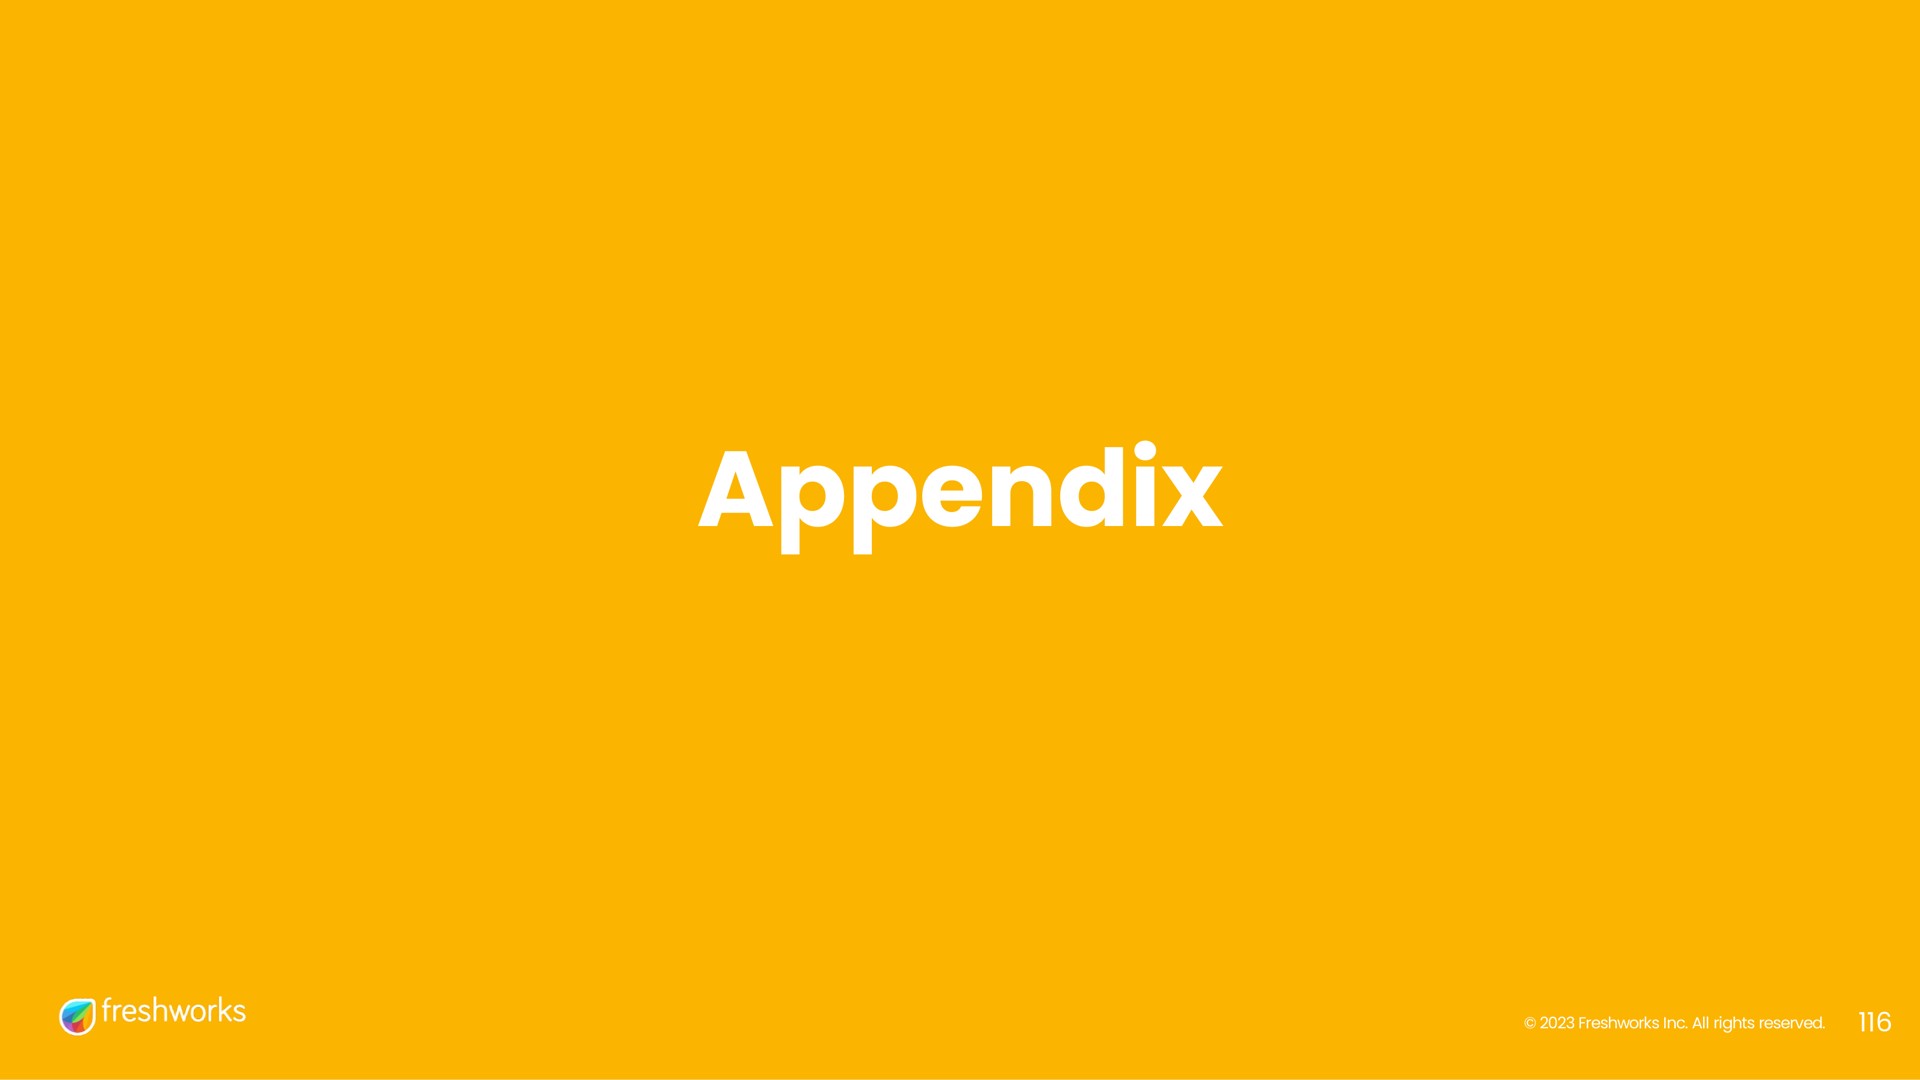 appendix | Freshworks